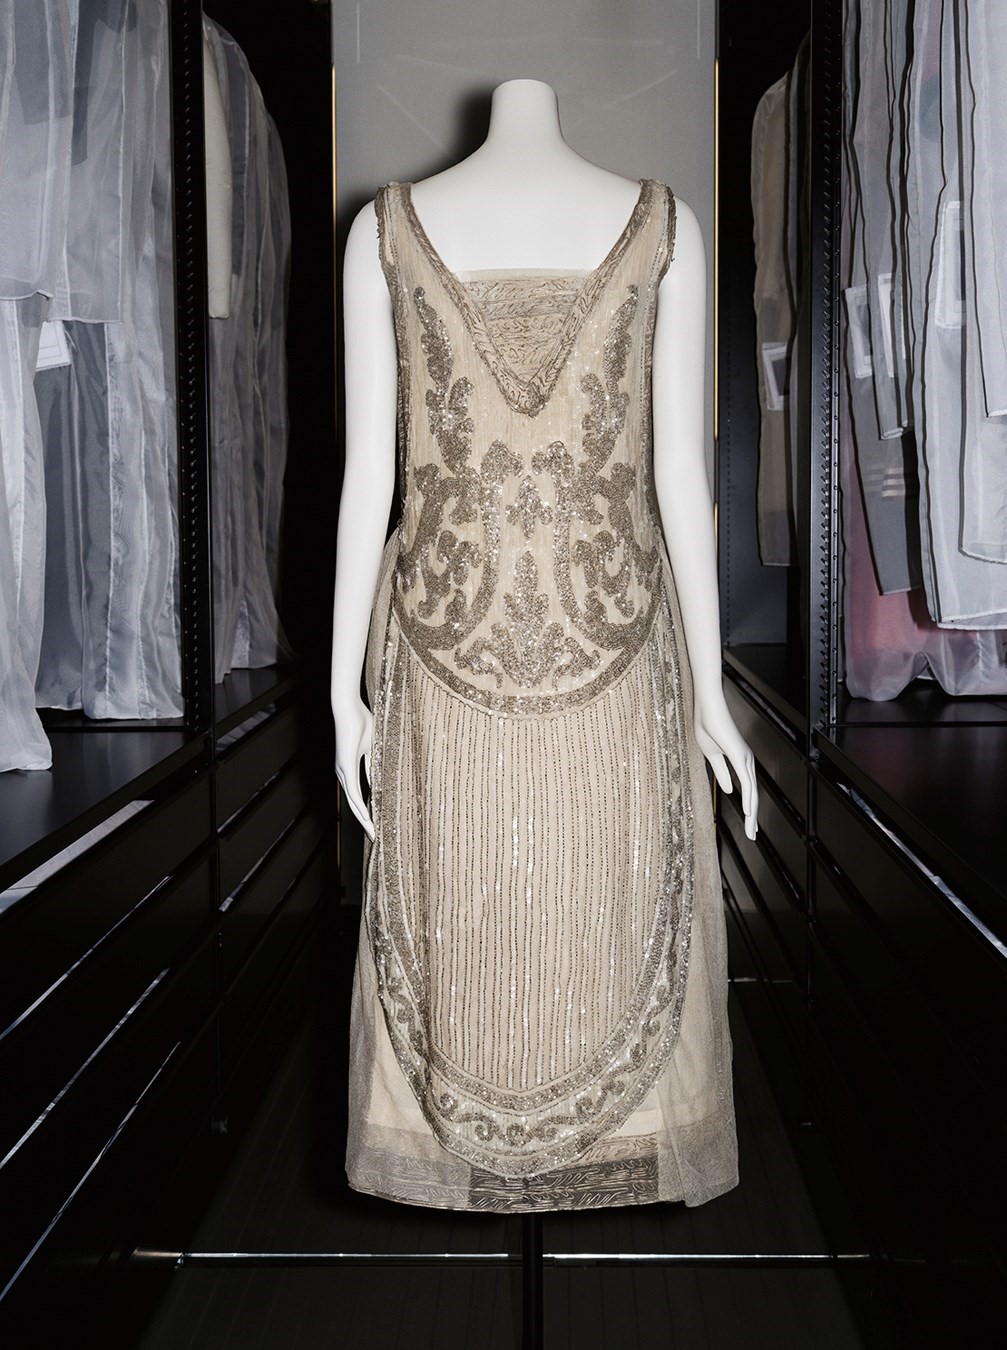 Coco Chanel, Fashion Designer 1883 - 1971 - Blue 17 Vintage Clothing